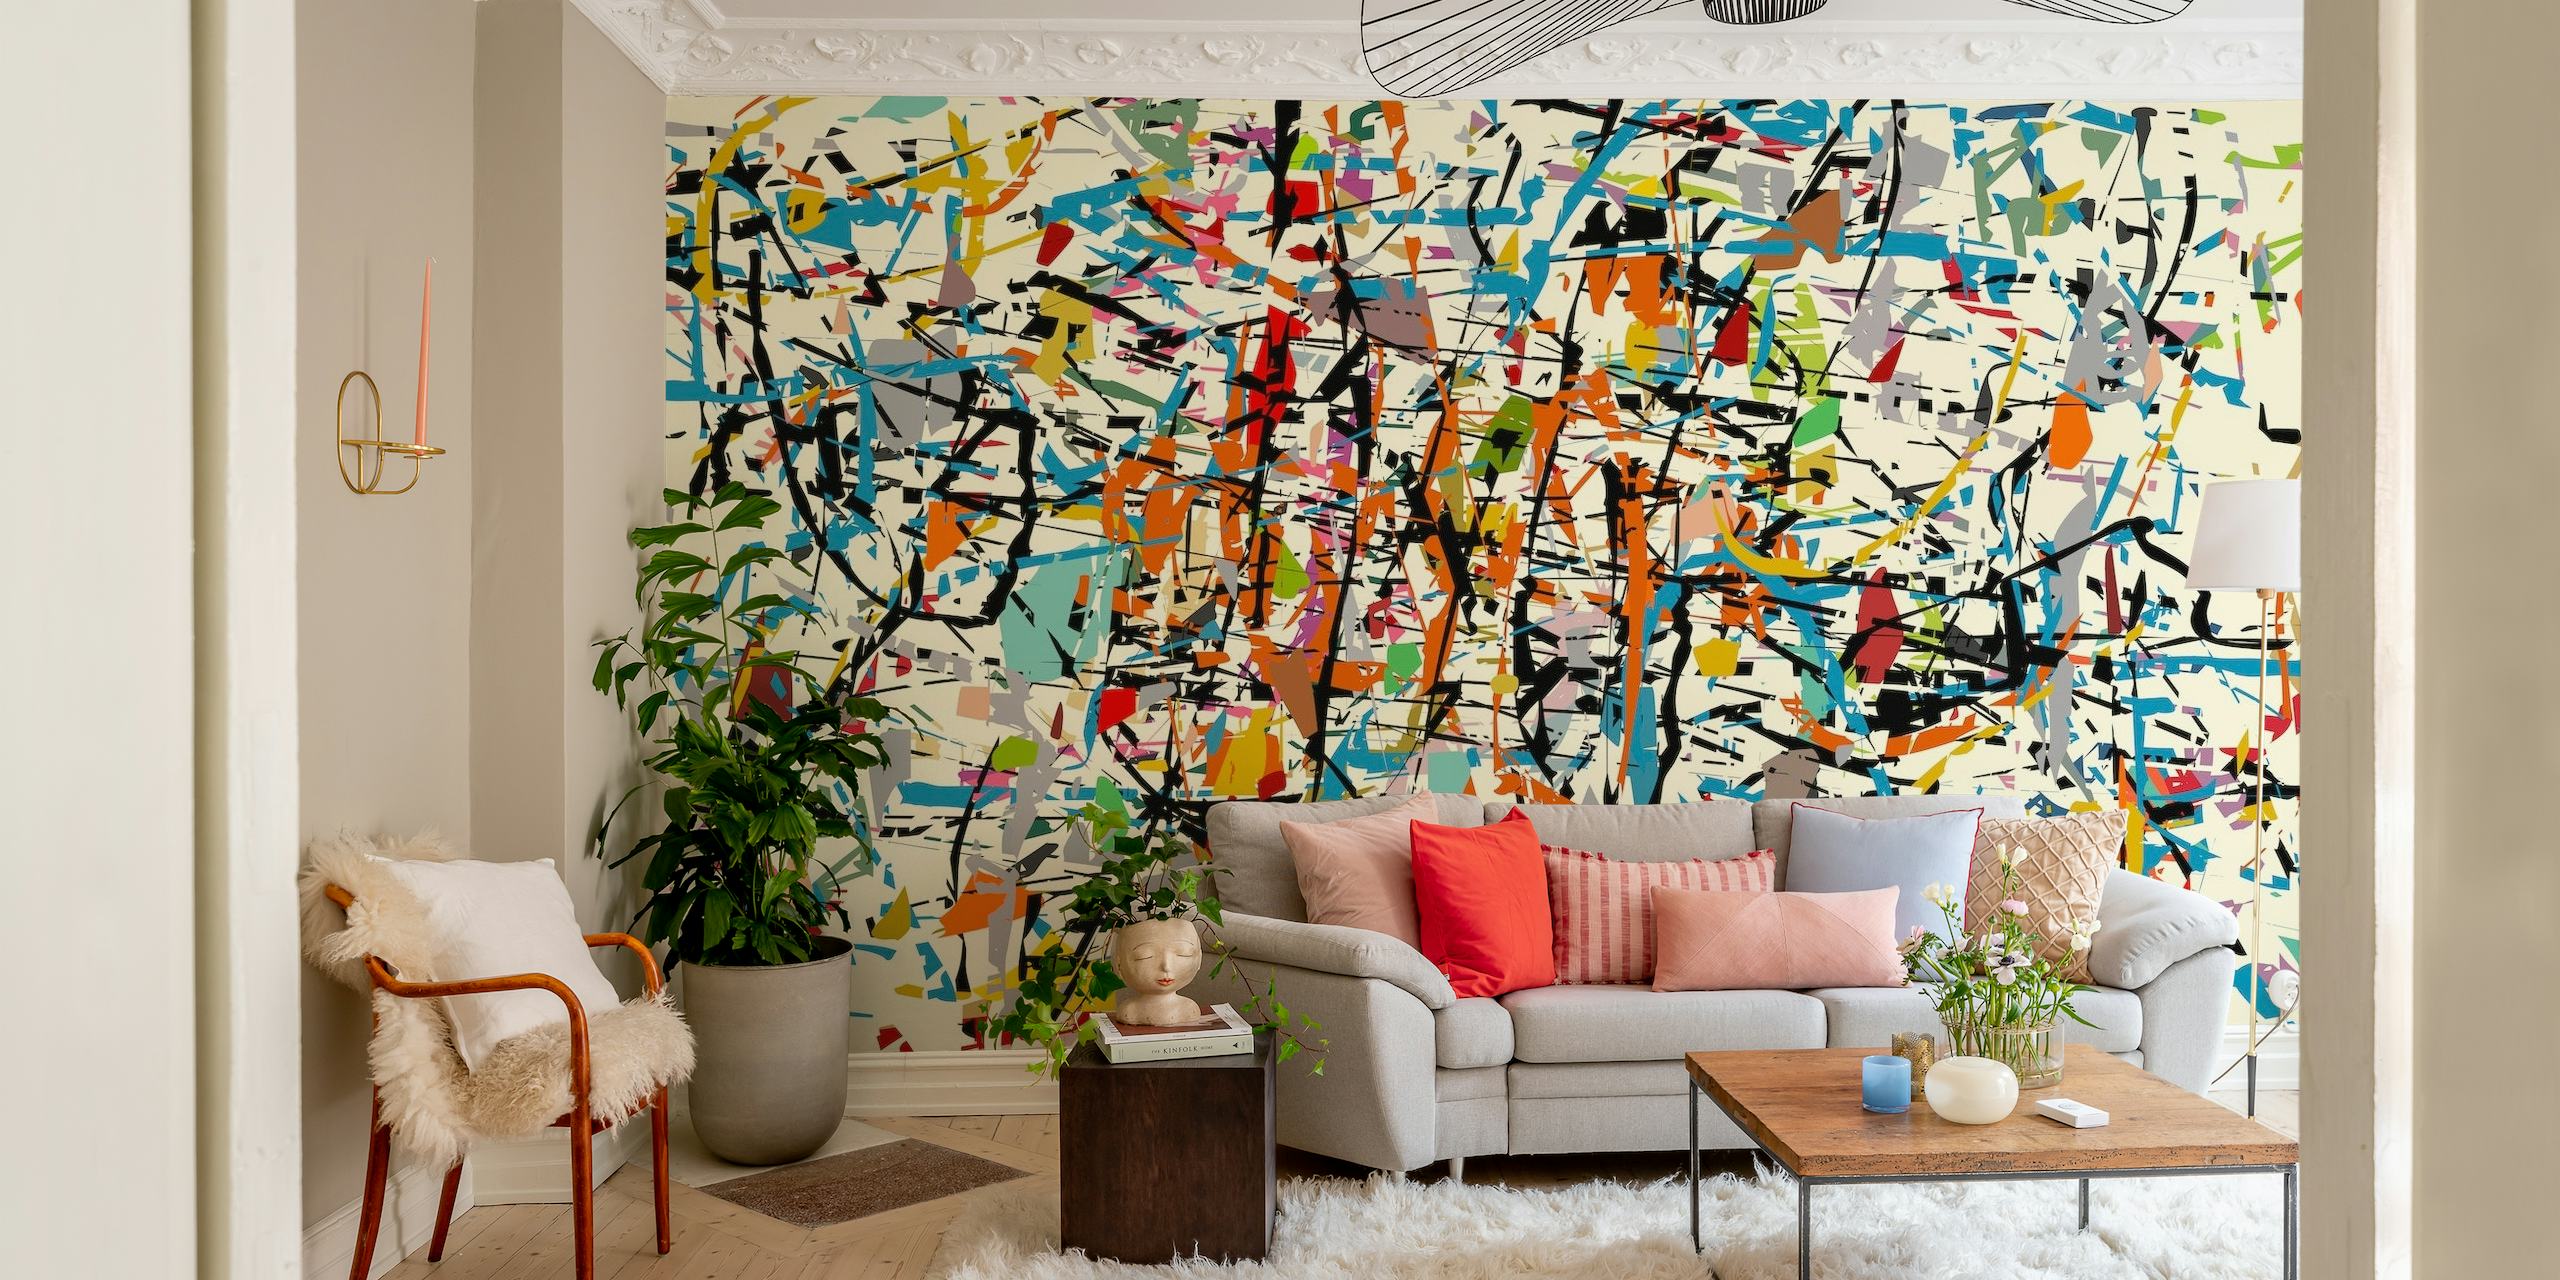 Pollock Wink 37 wallpaper